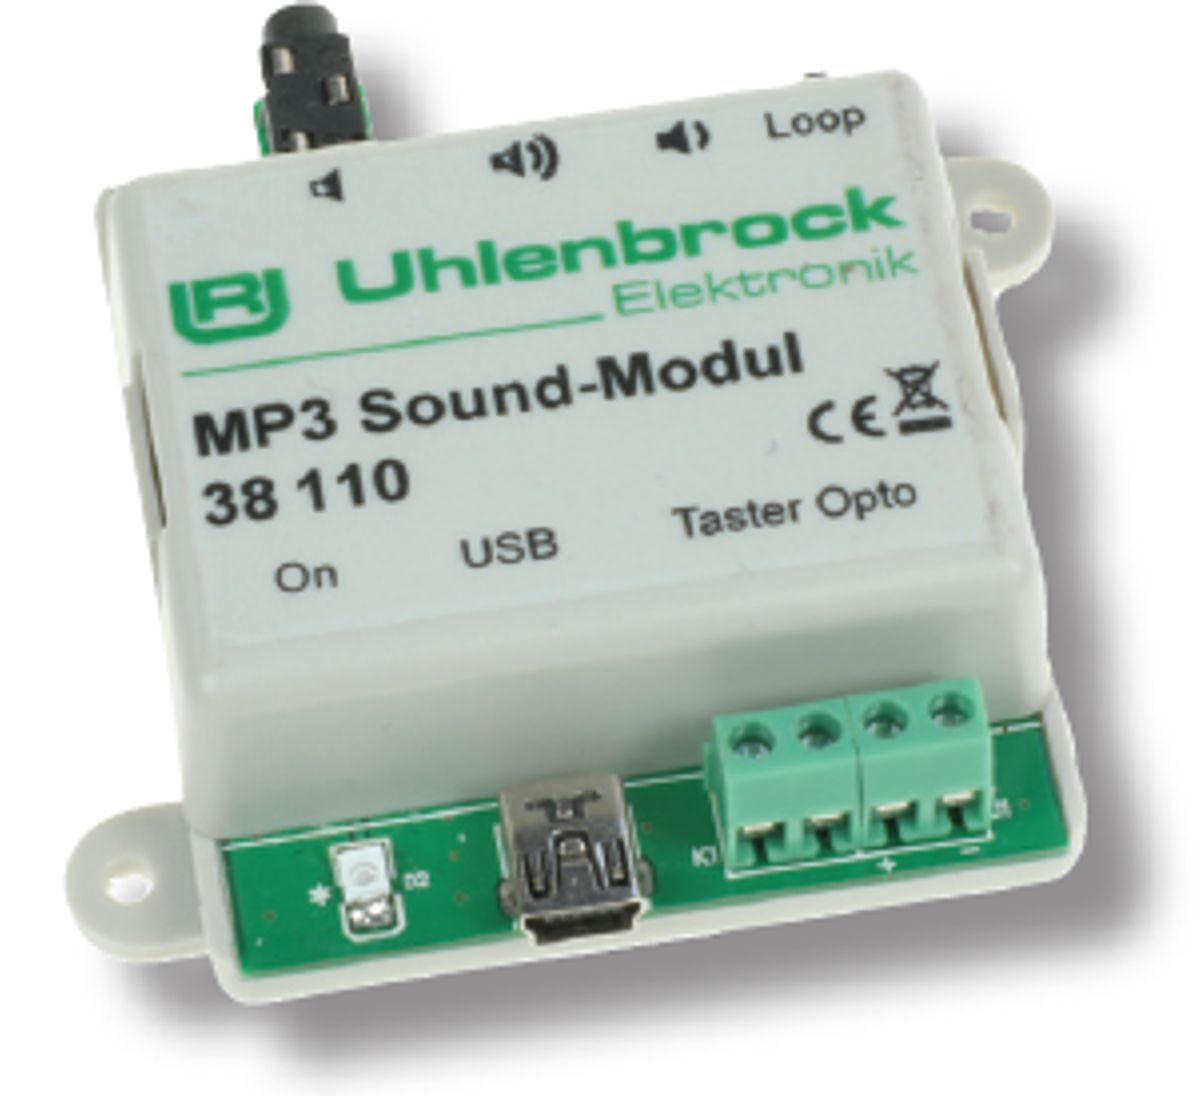 Uhlenbrock 38110 - MP3 Sound-Modul